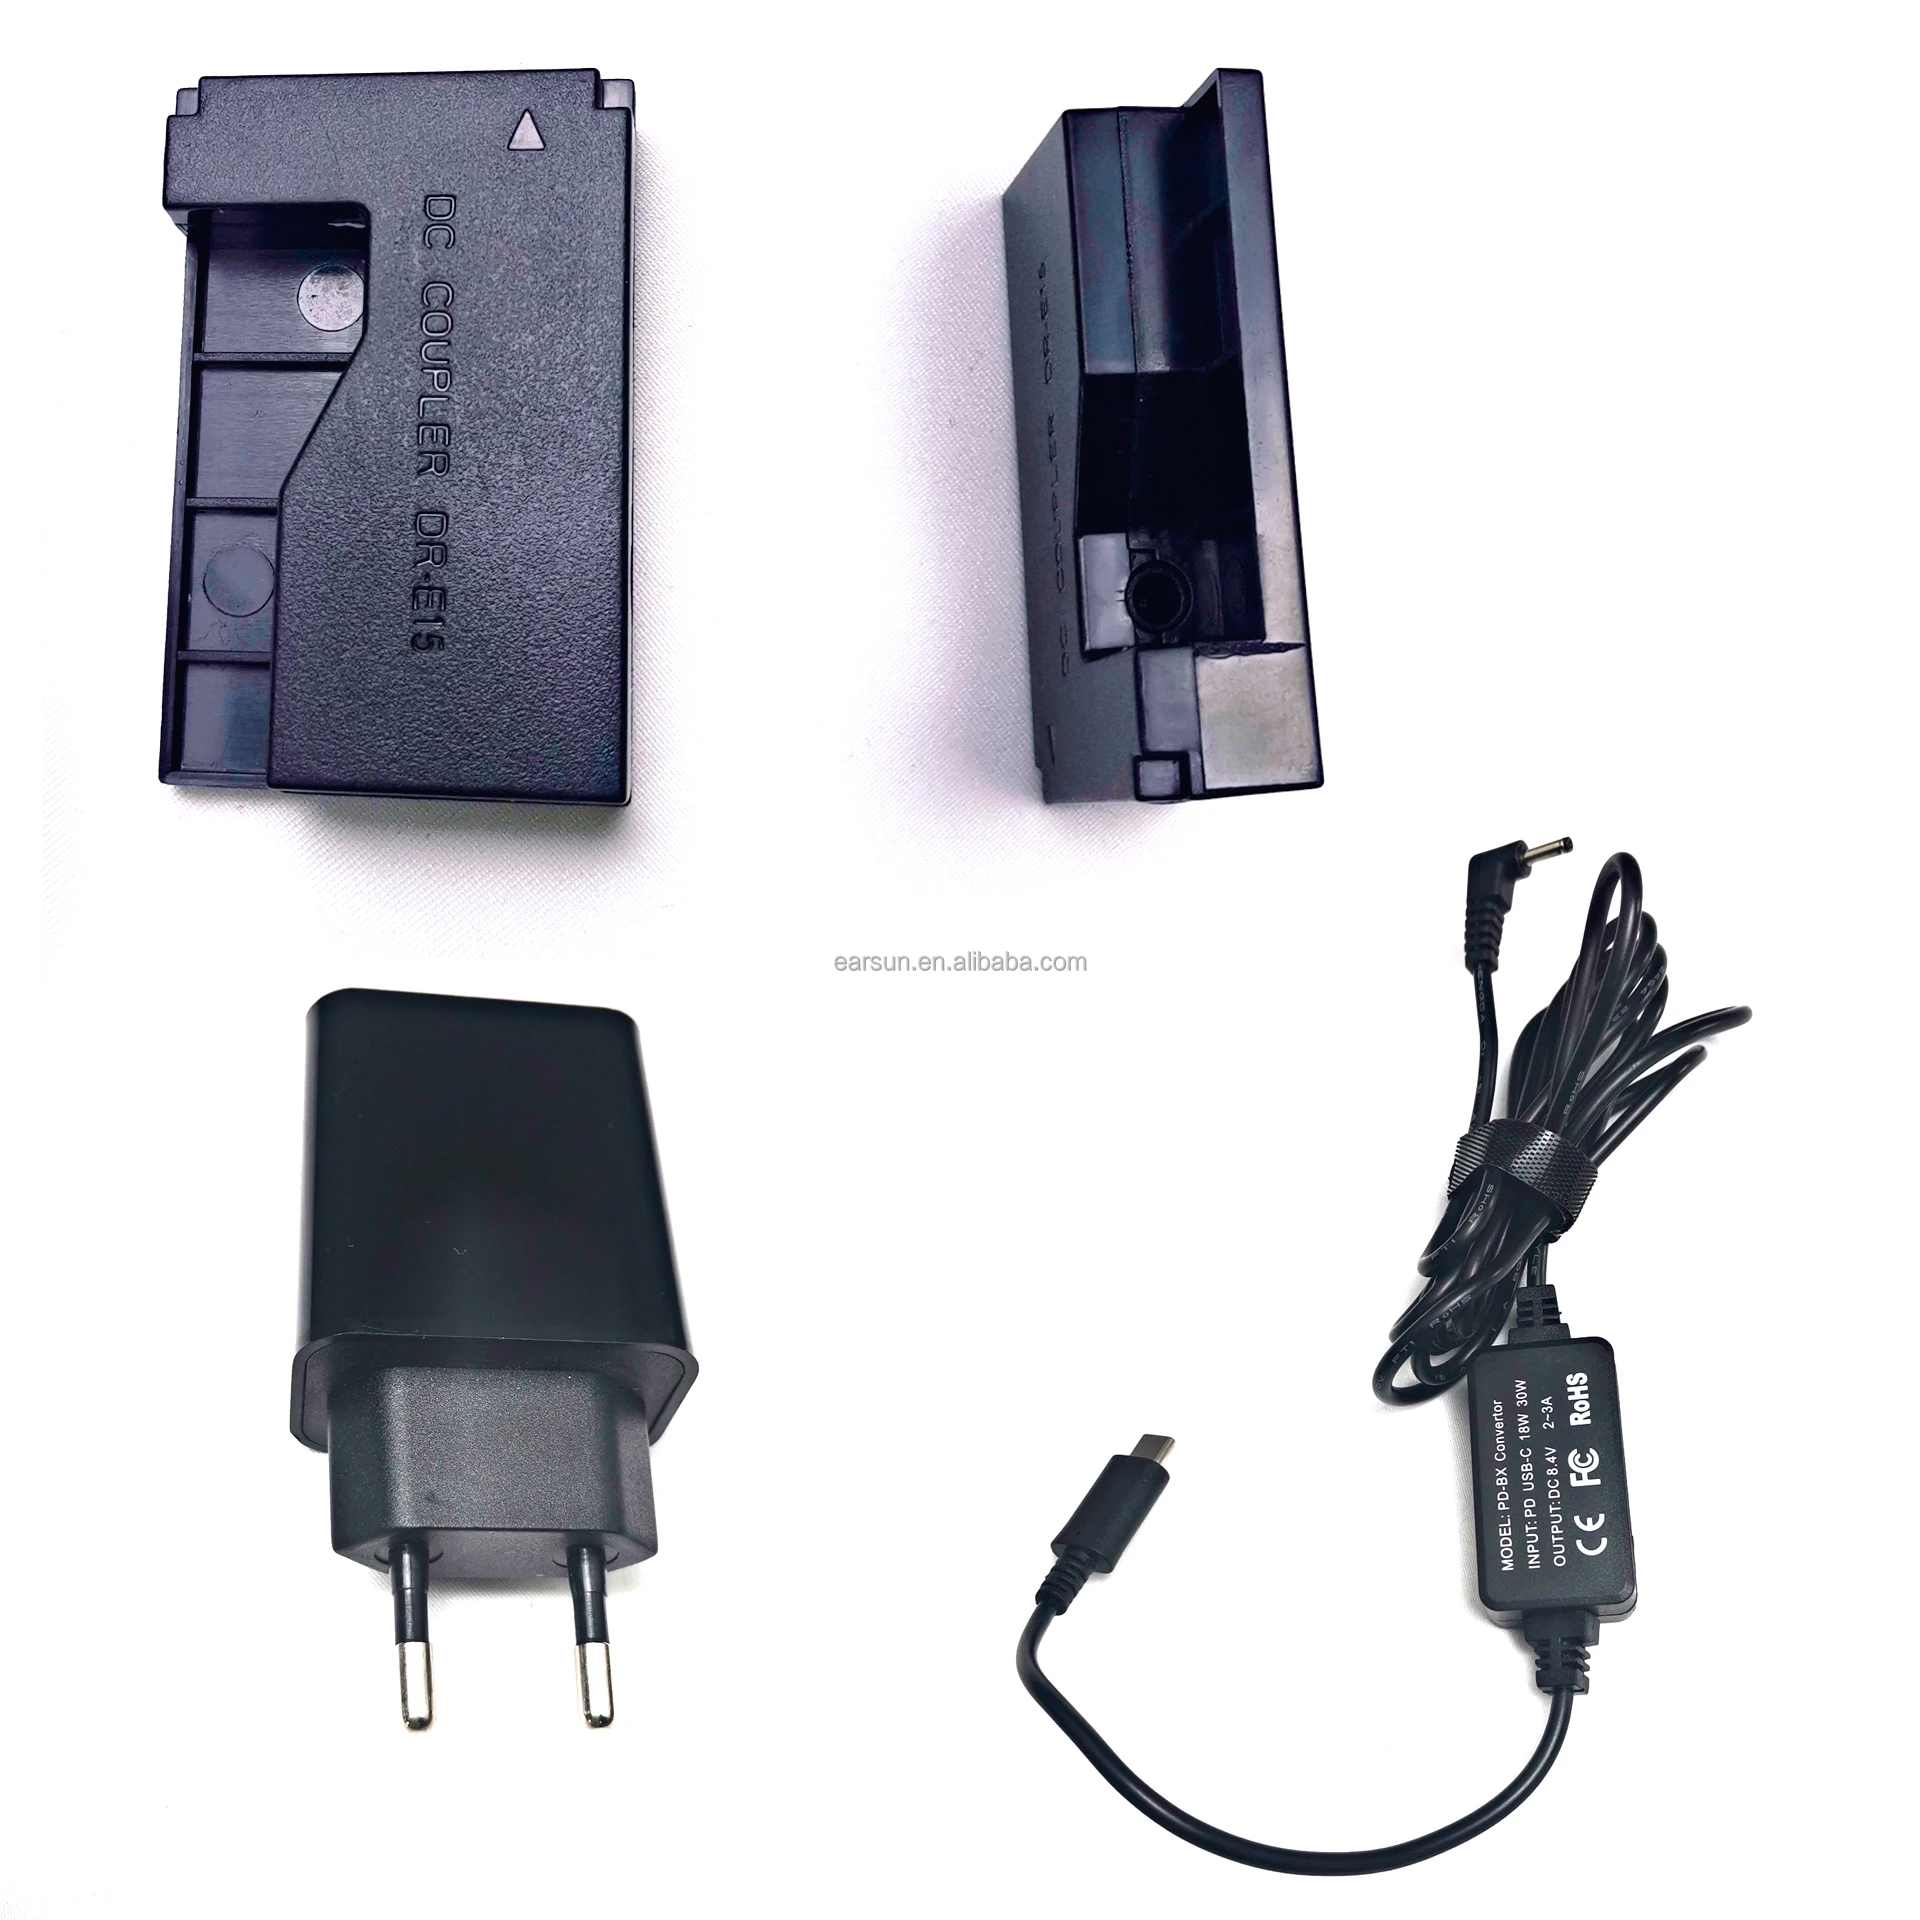 

Free shipping DR-E15 DRE15 LP-E15 DC Coupler + Power Cable for Canon EOS Rebel SL1,100D DSLR Cameras, Black